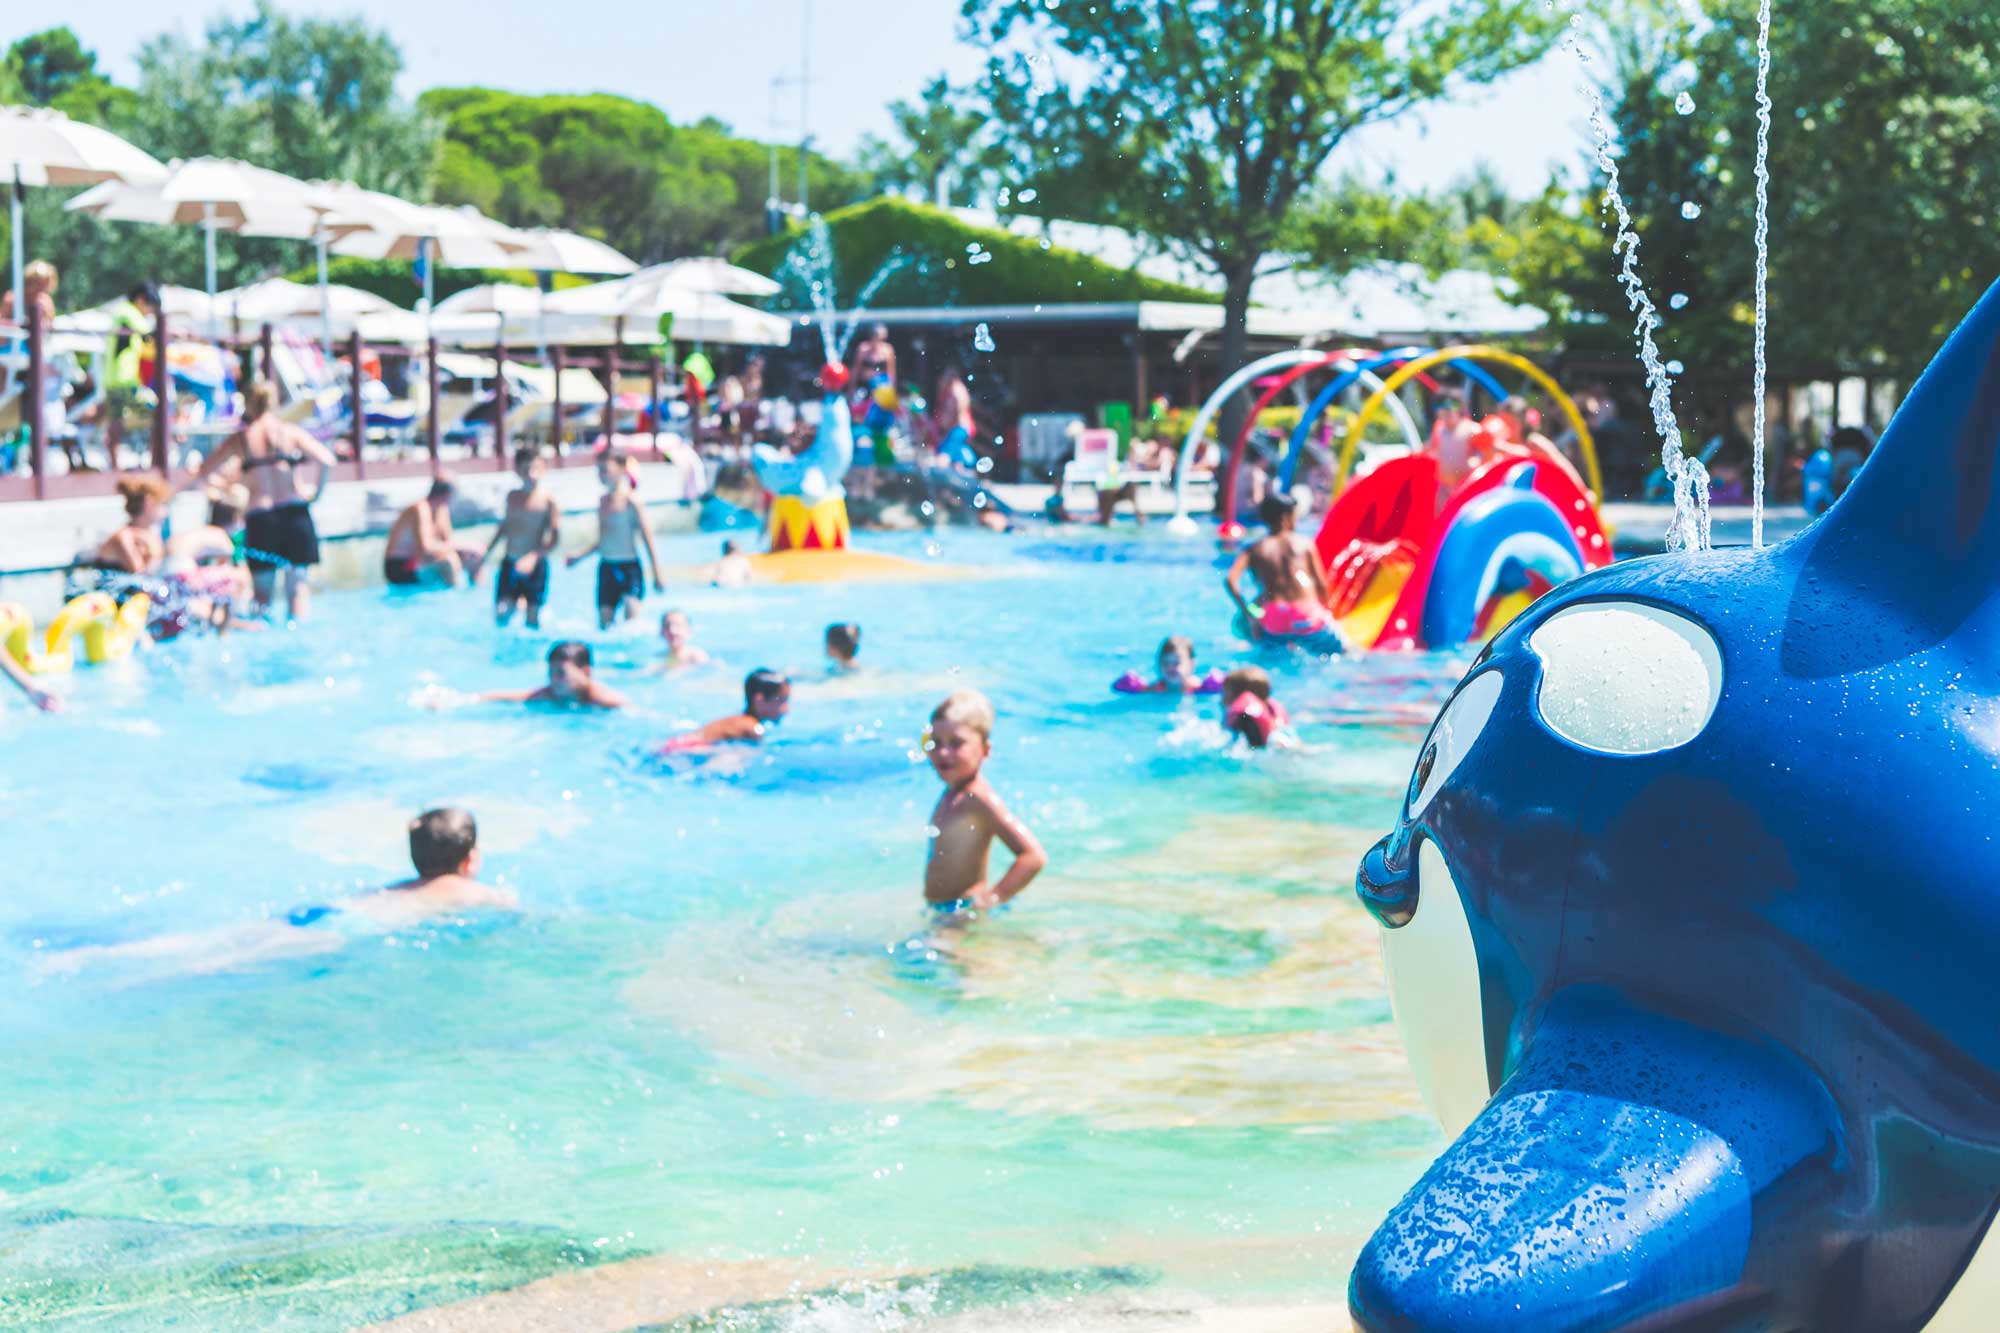 Aquapark: fun is guaranteed